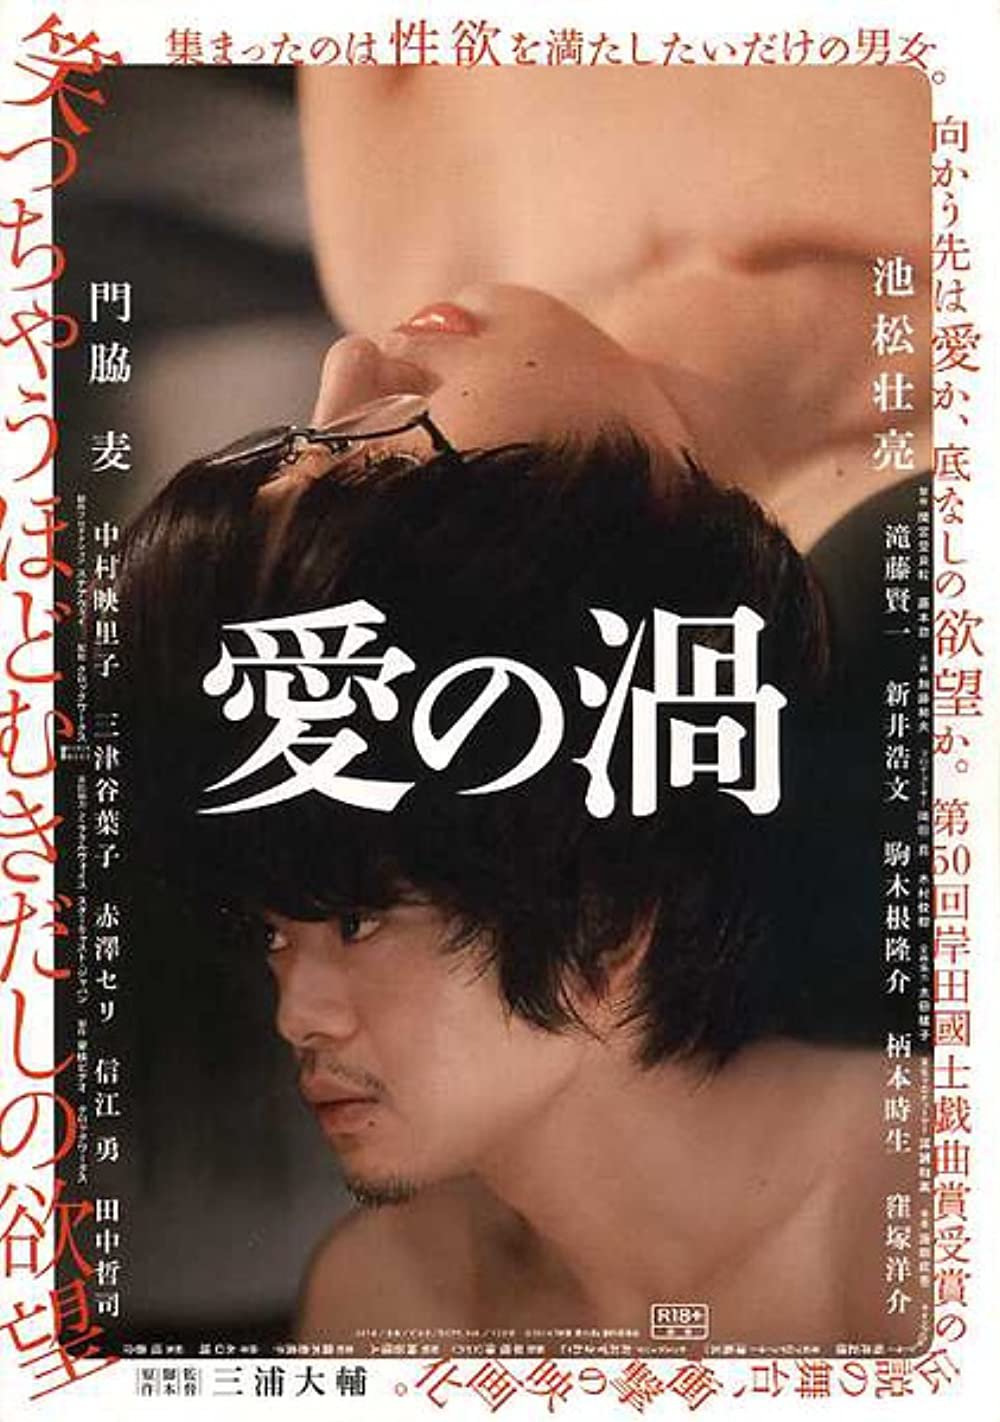 Adult movies japan